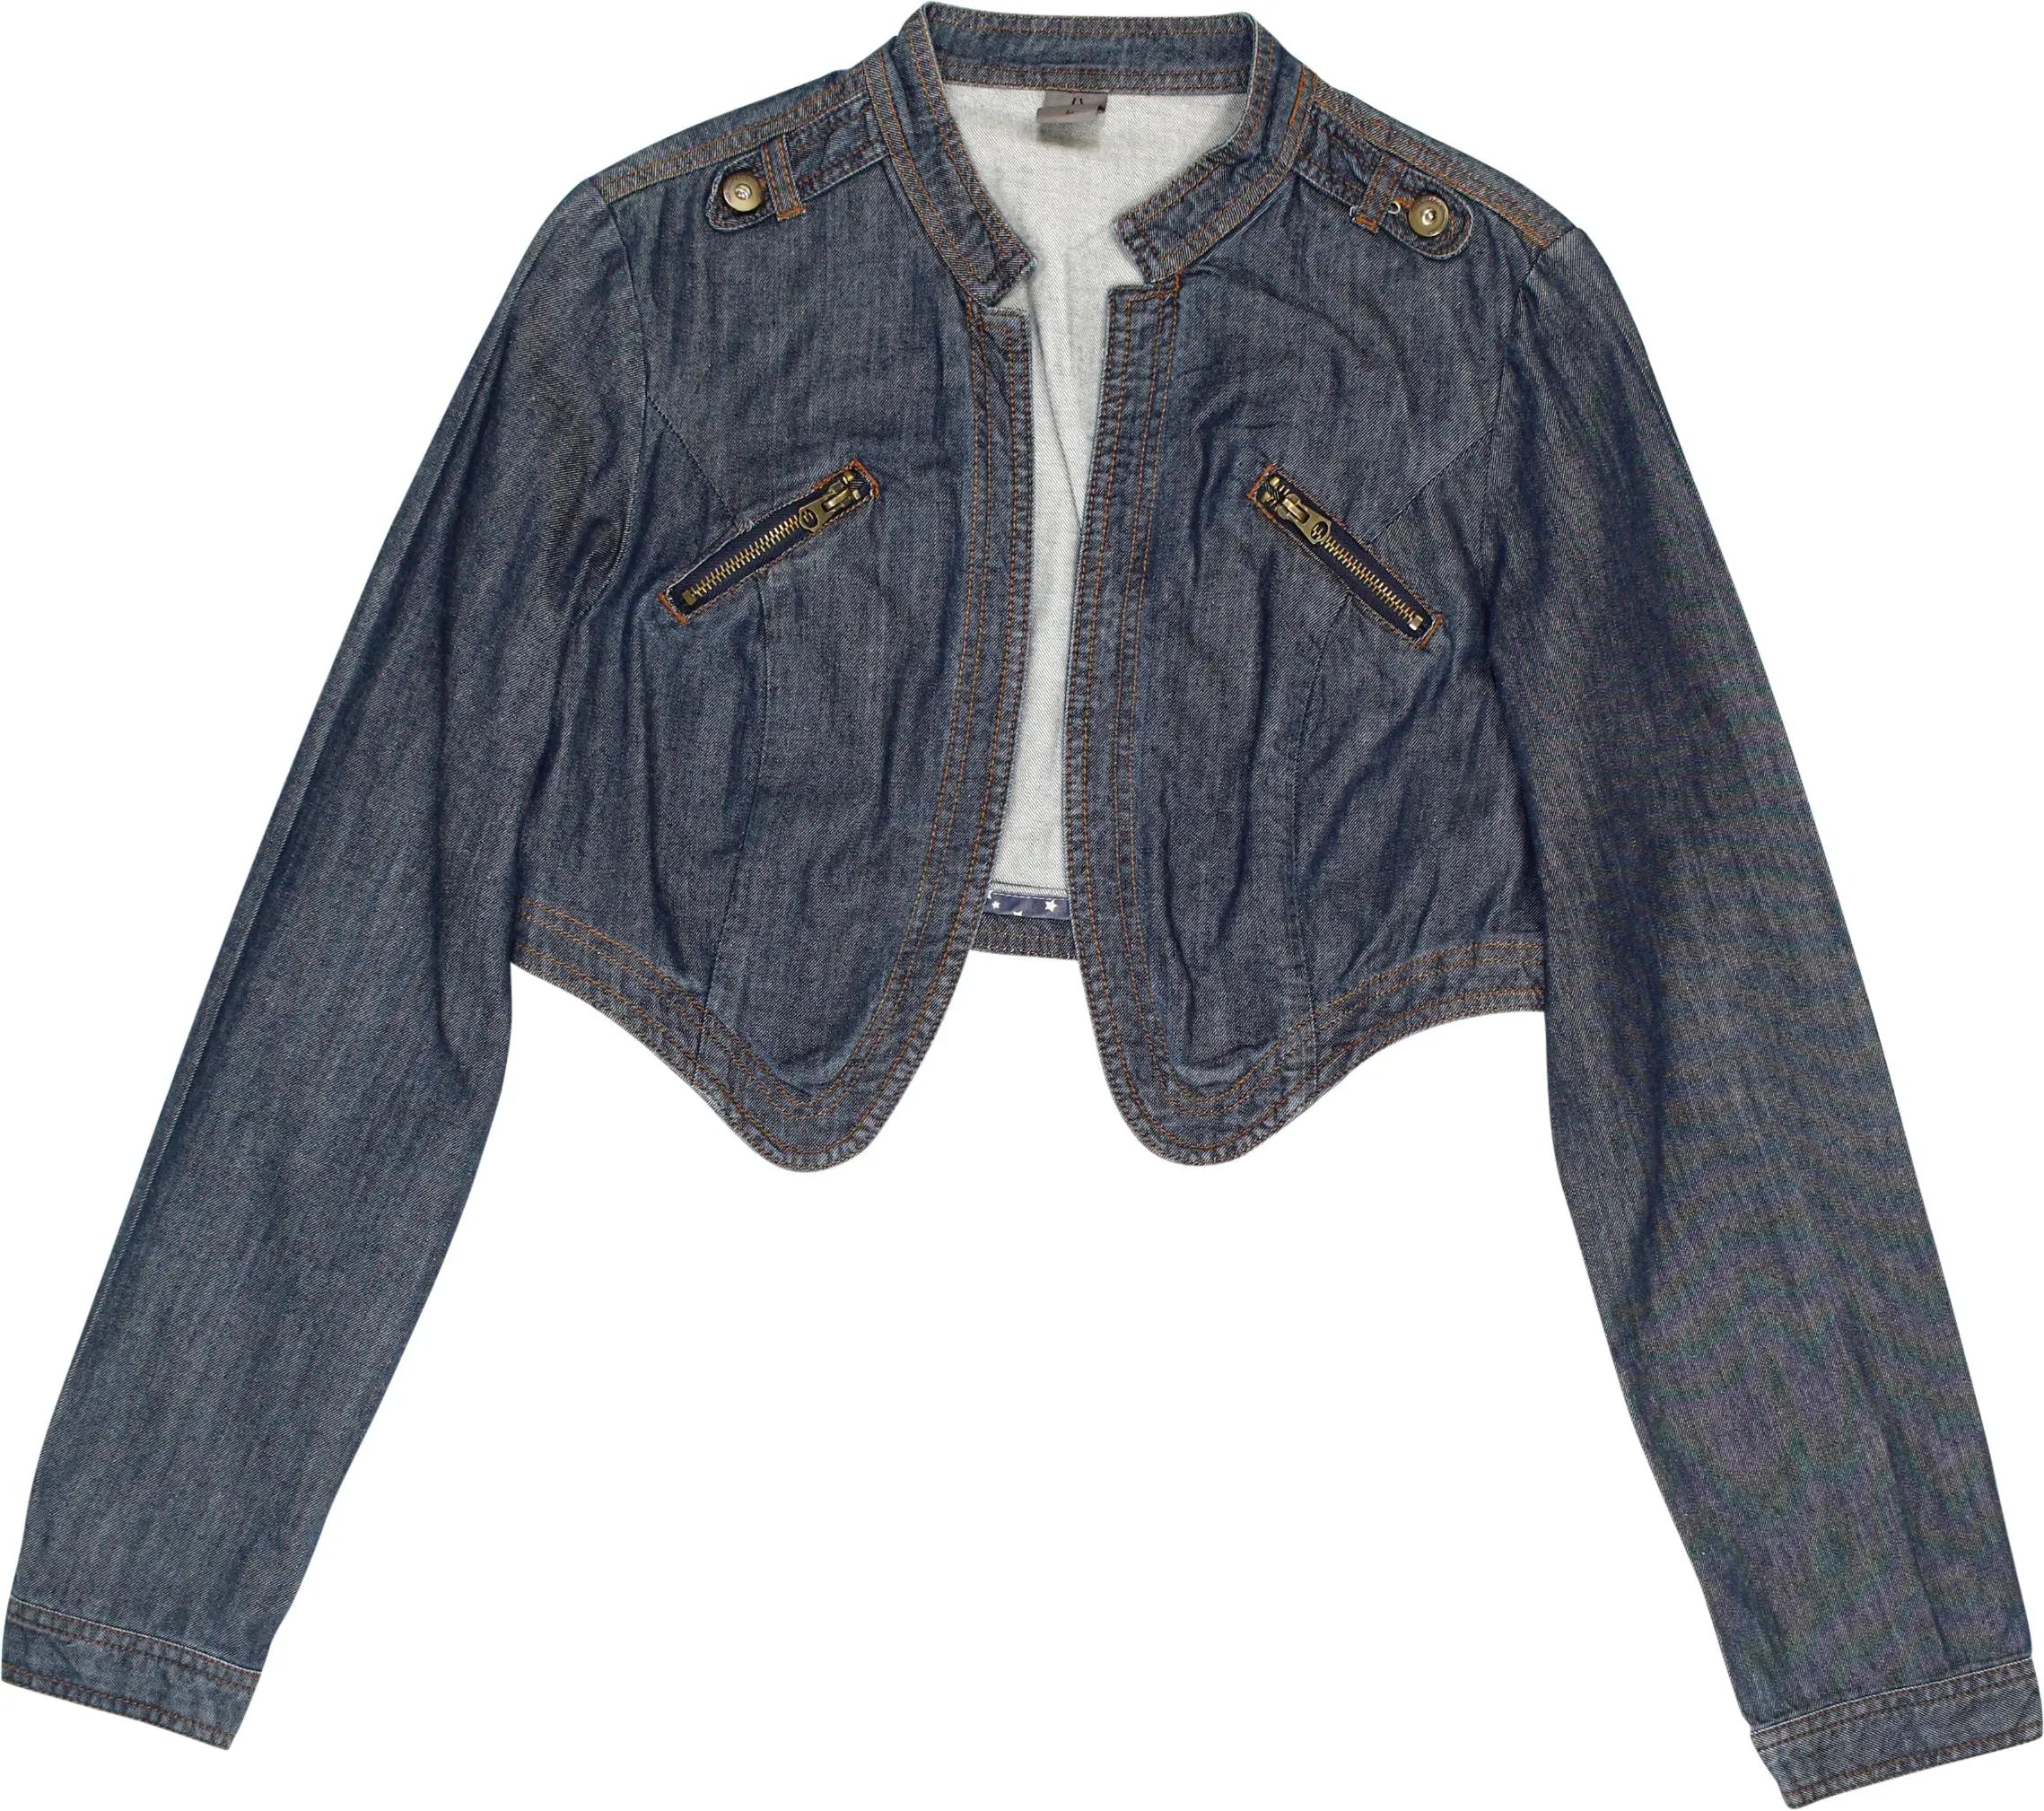 Vero Moda - Denim Jacket- ThriftTale.com - Vintage and second handclothing